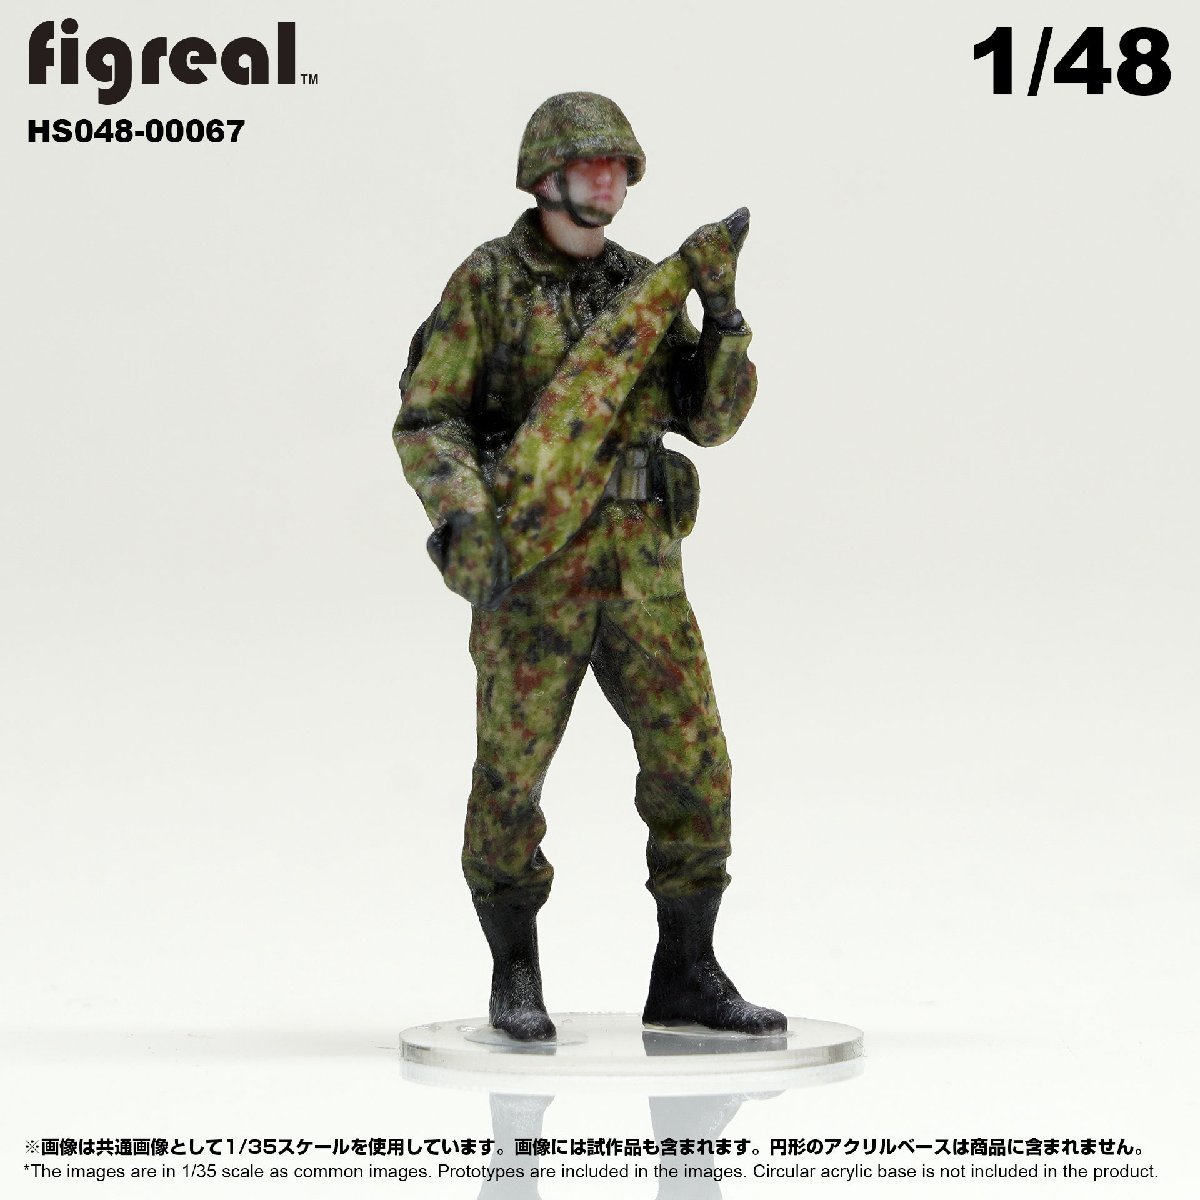 HS048-00067 figreal 陸上自衛隊 1/48 JGSDF 高精細フィギュア_画像1